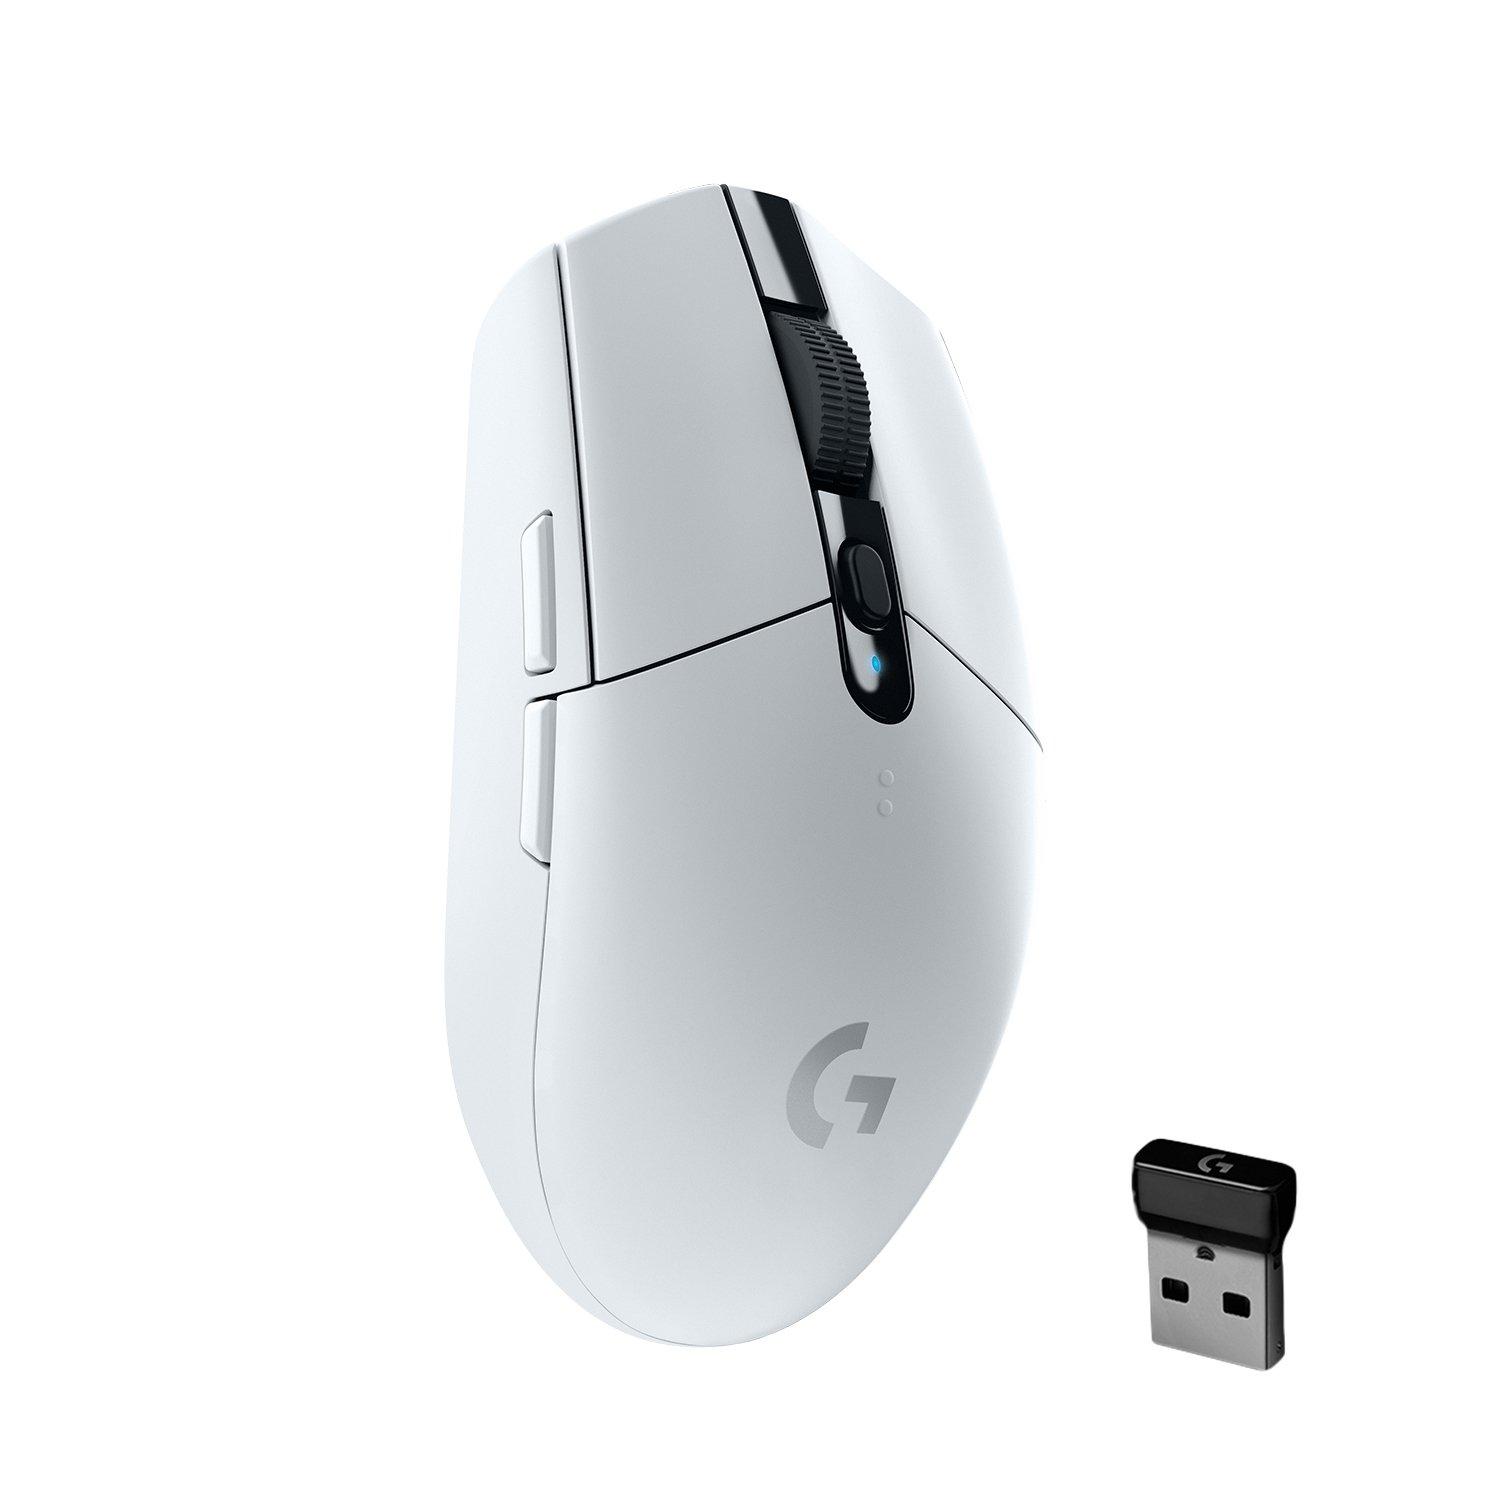 Logitech G305 Mouse | GameStop